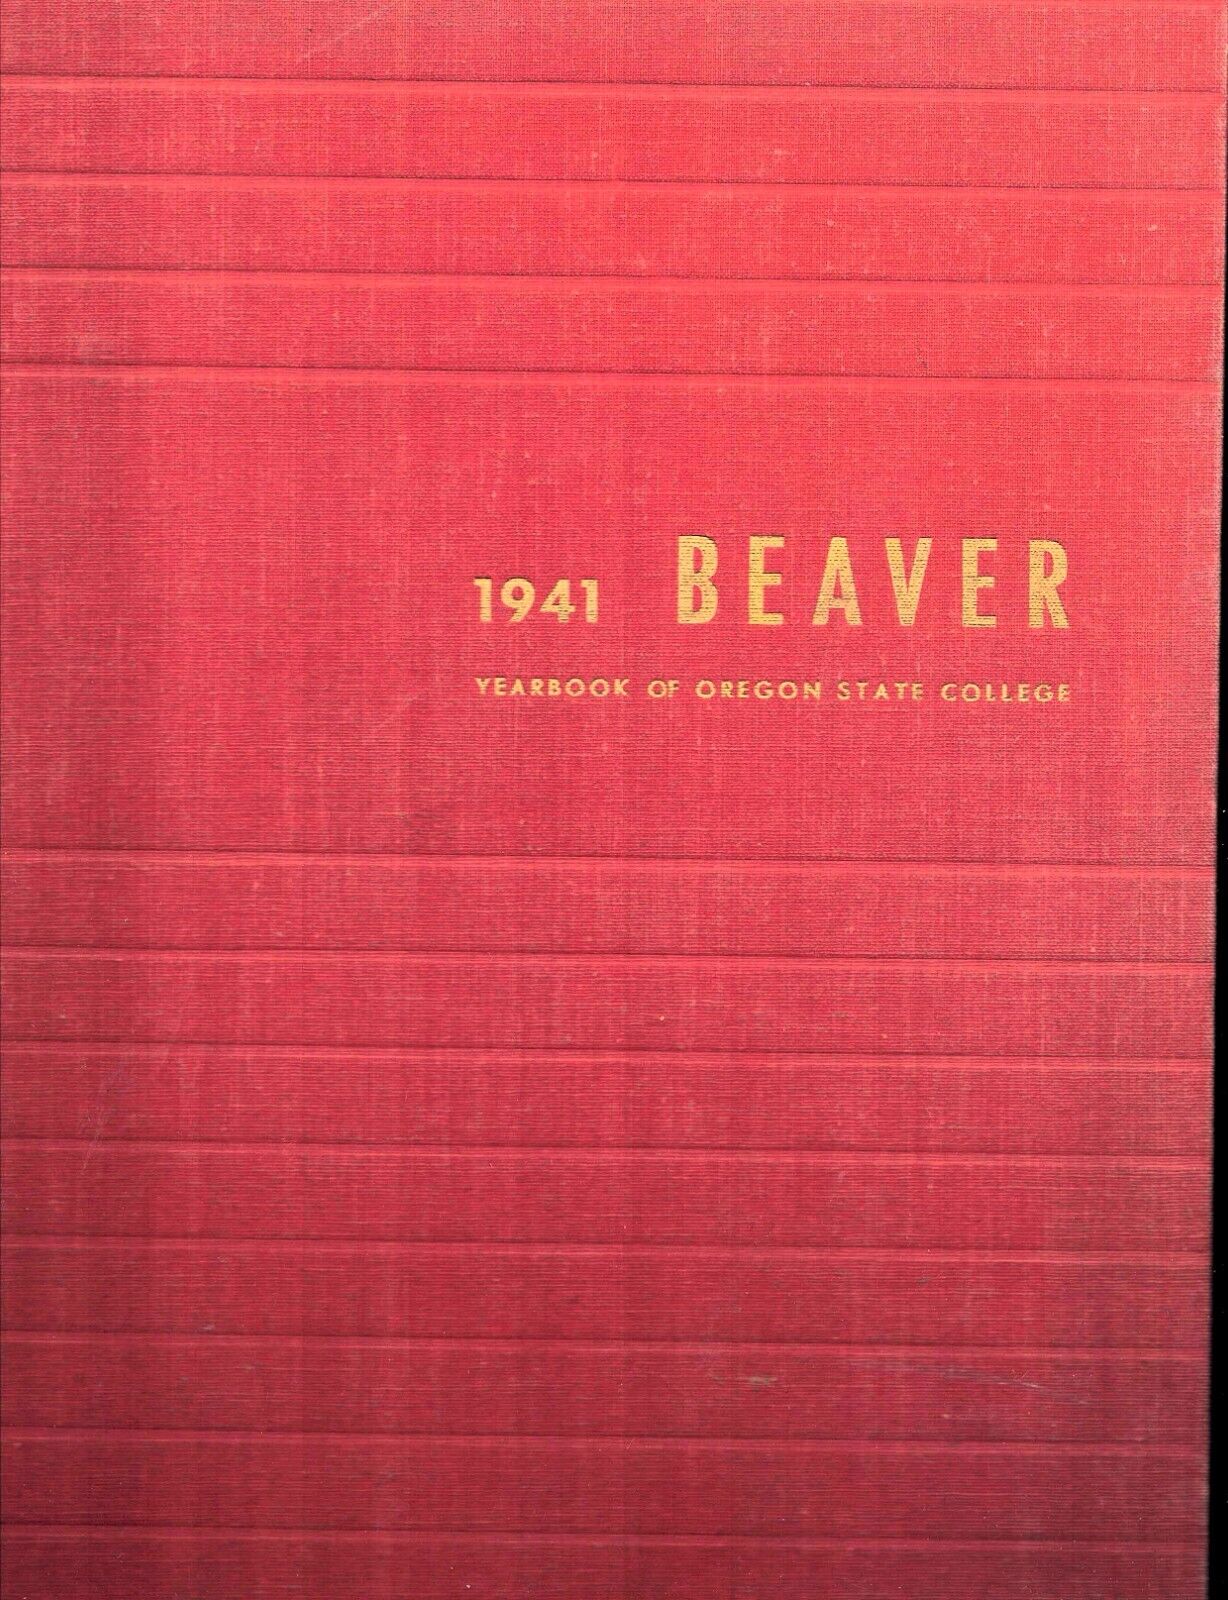 1941 Oregon State College Yearbook, Beaver, Corvallis, Oregon